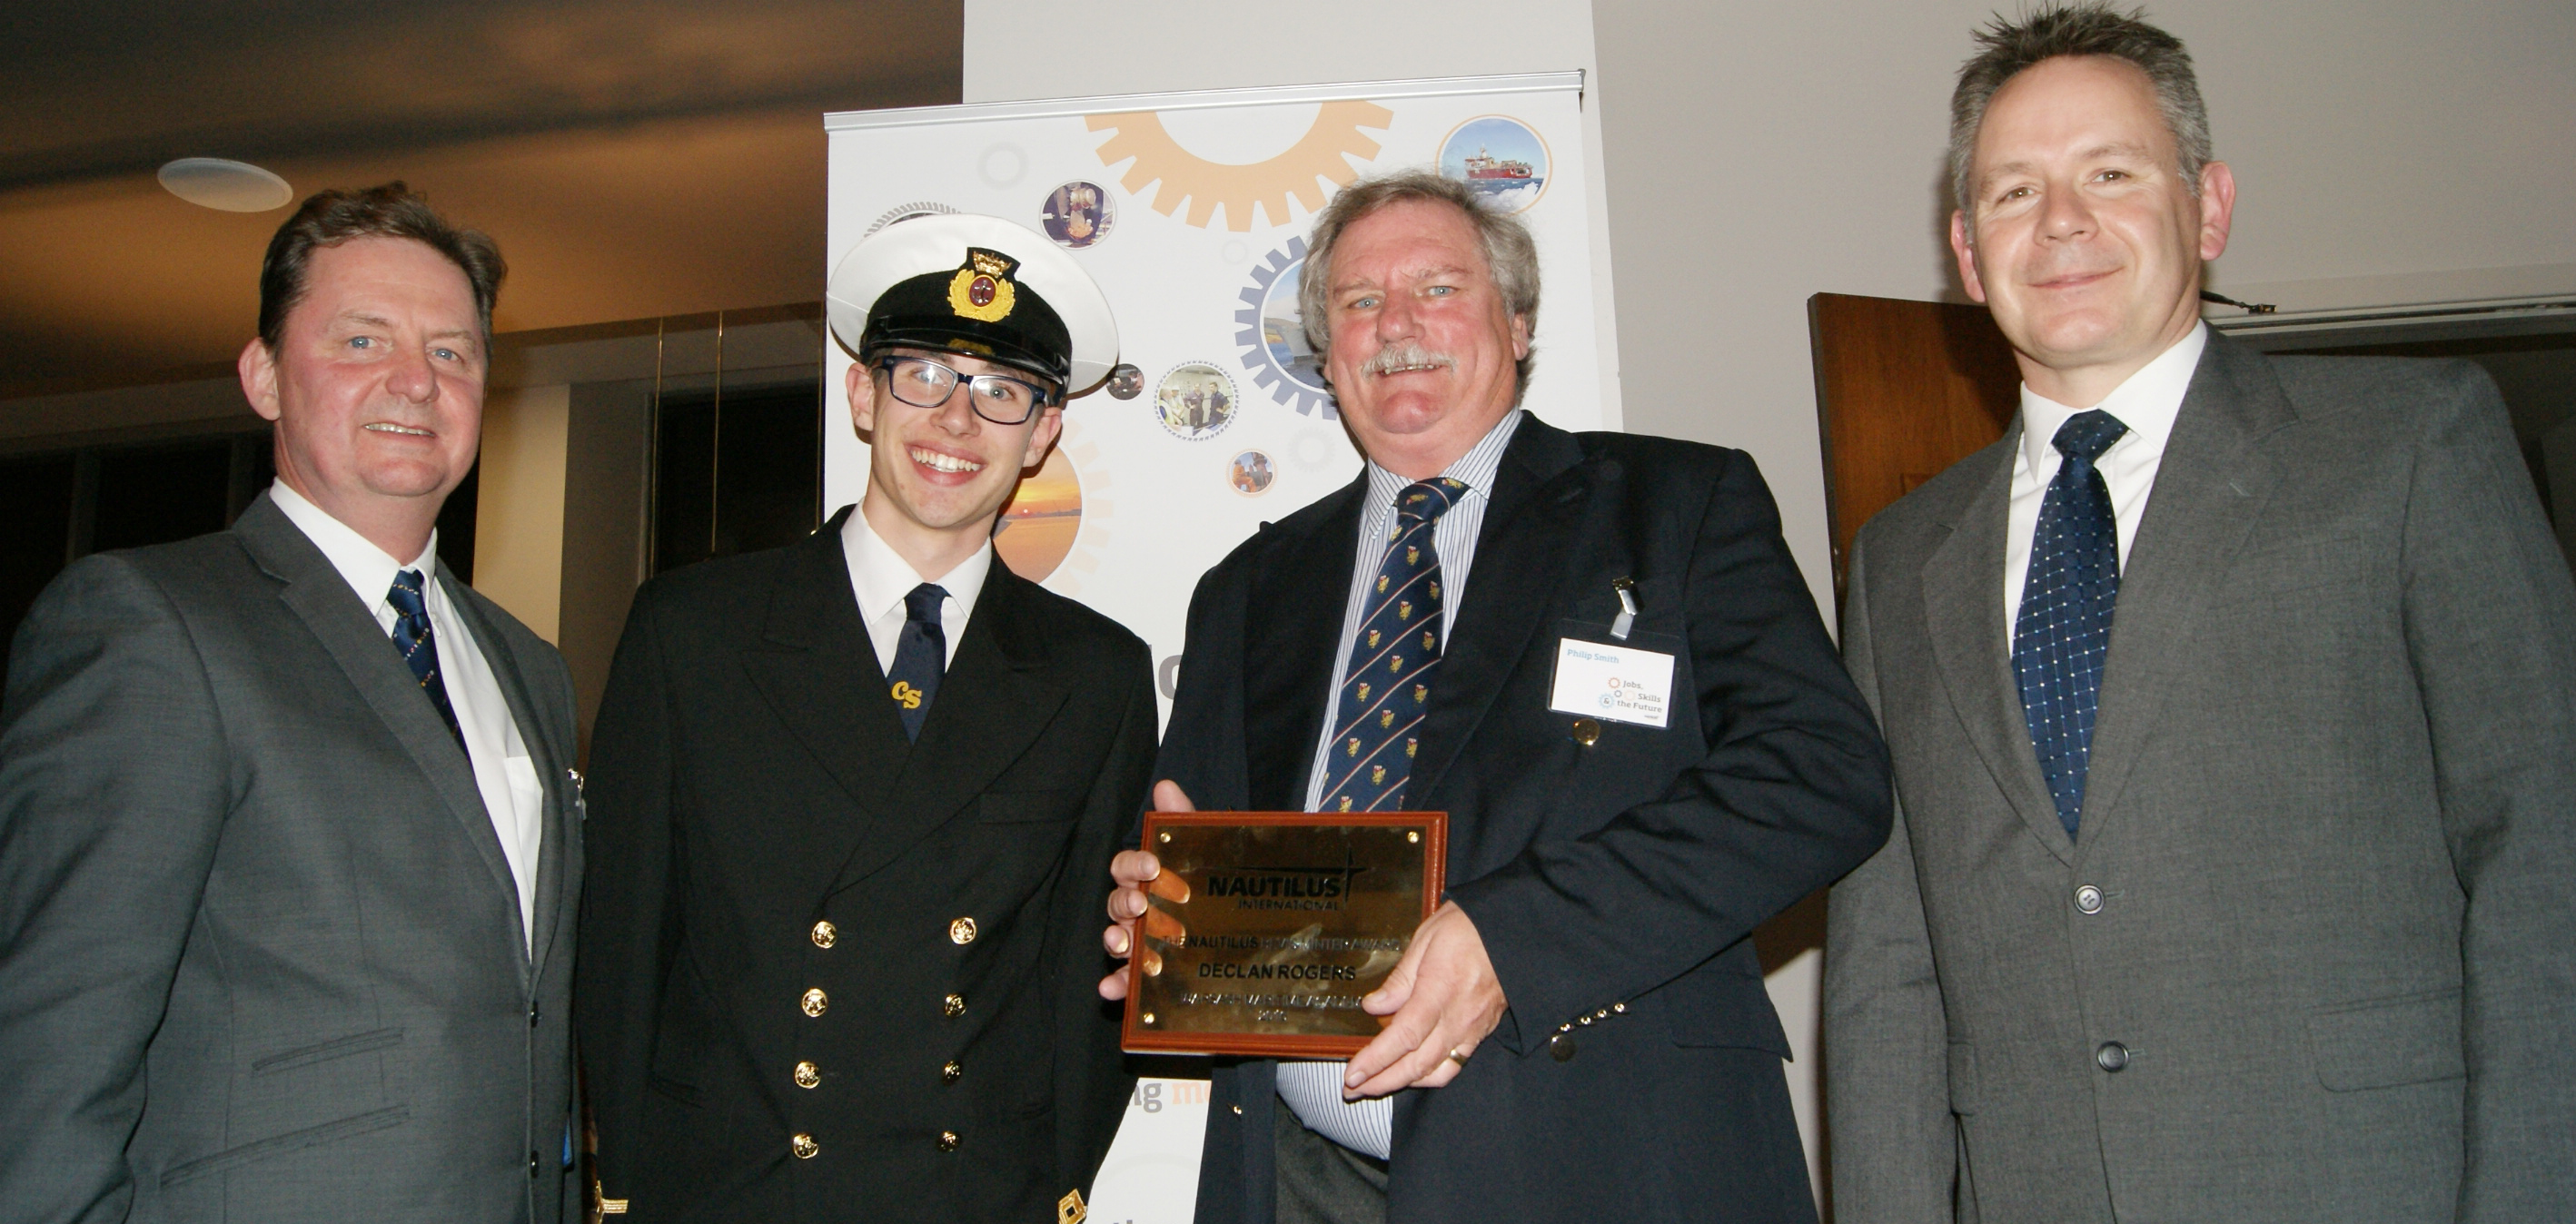 Declan Rogers reciving his award